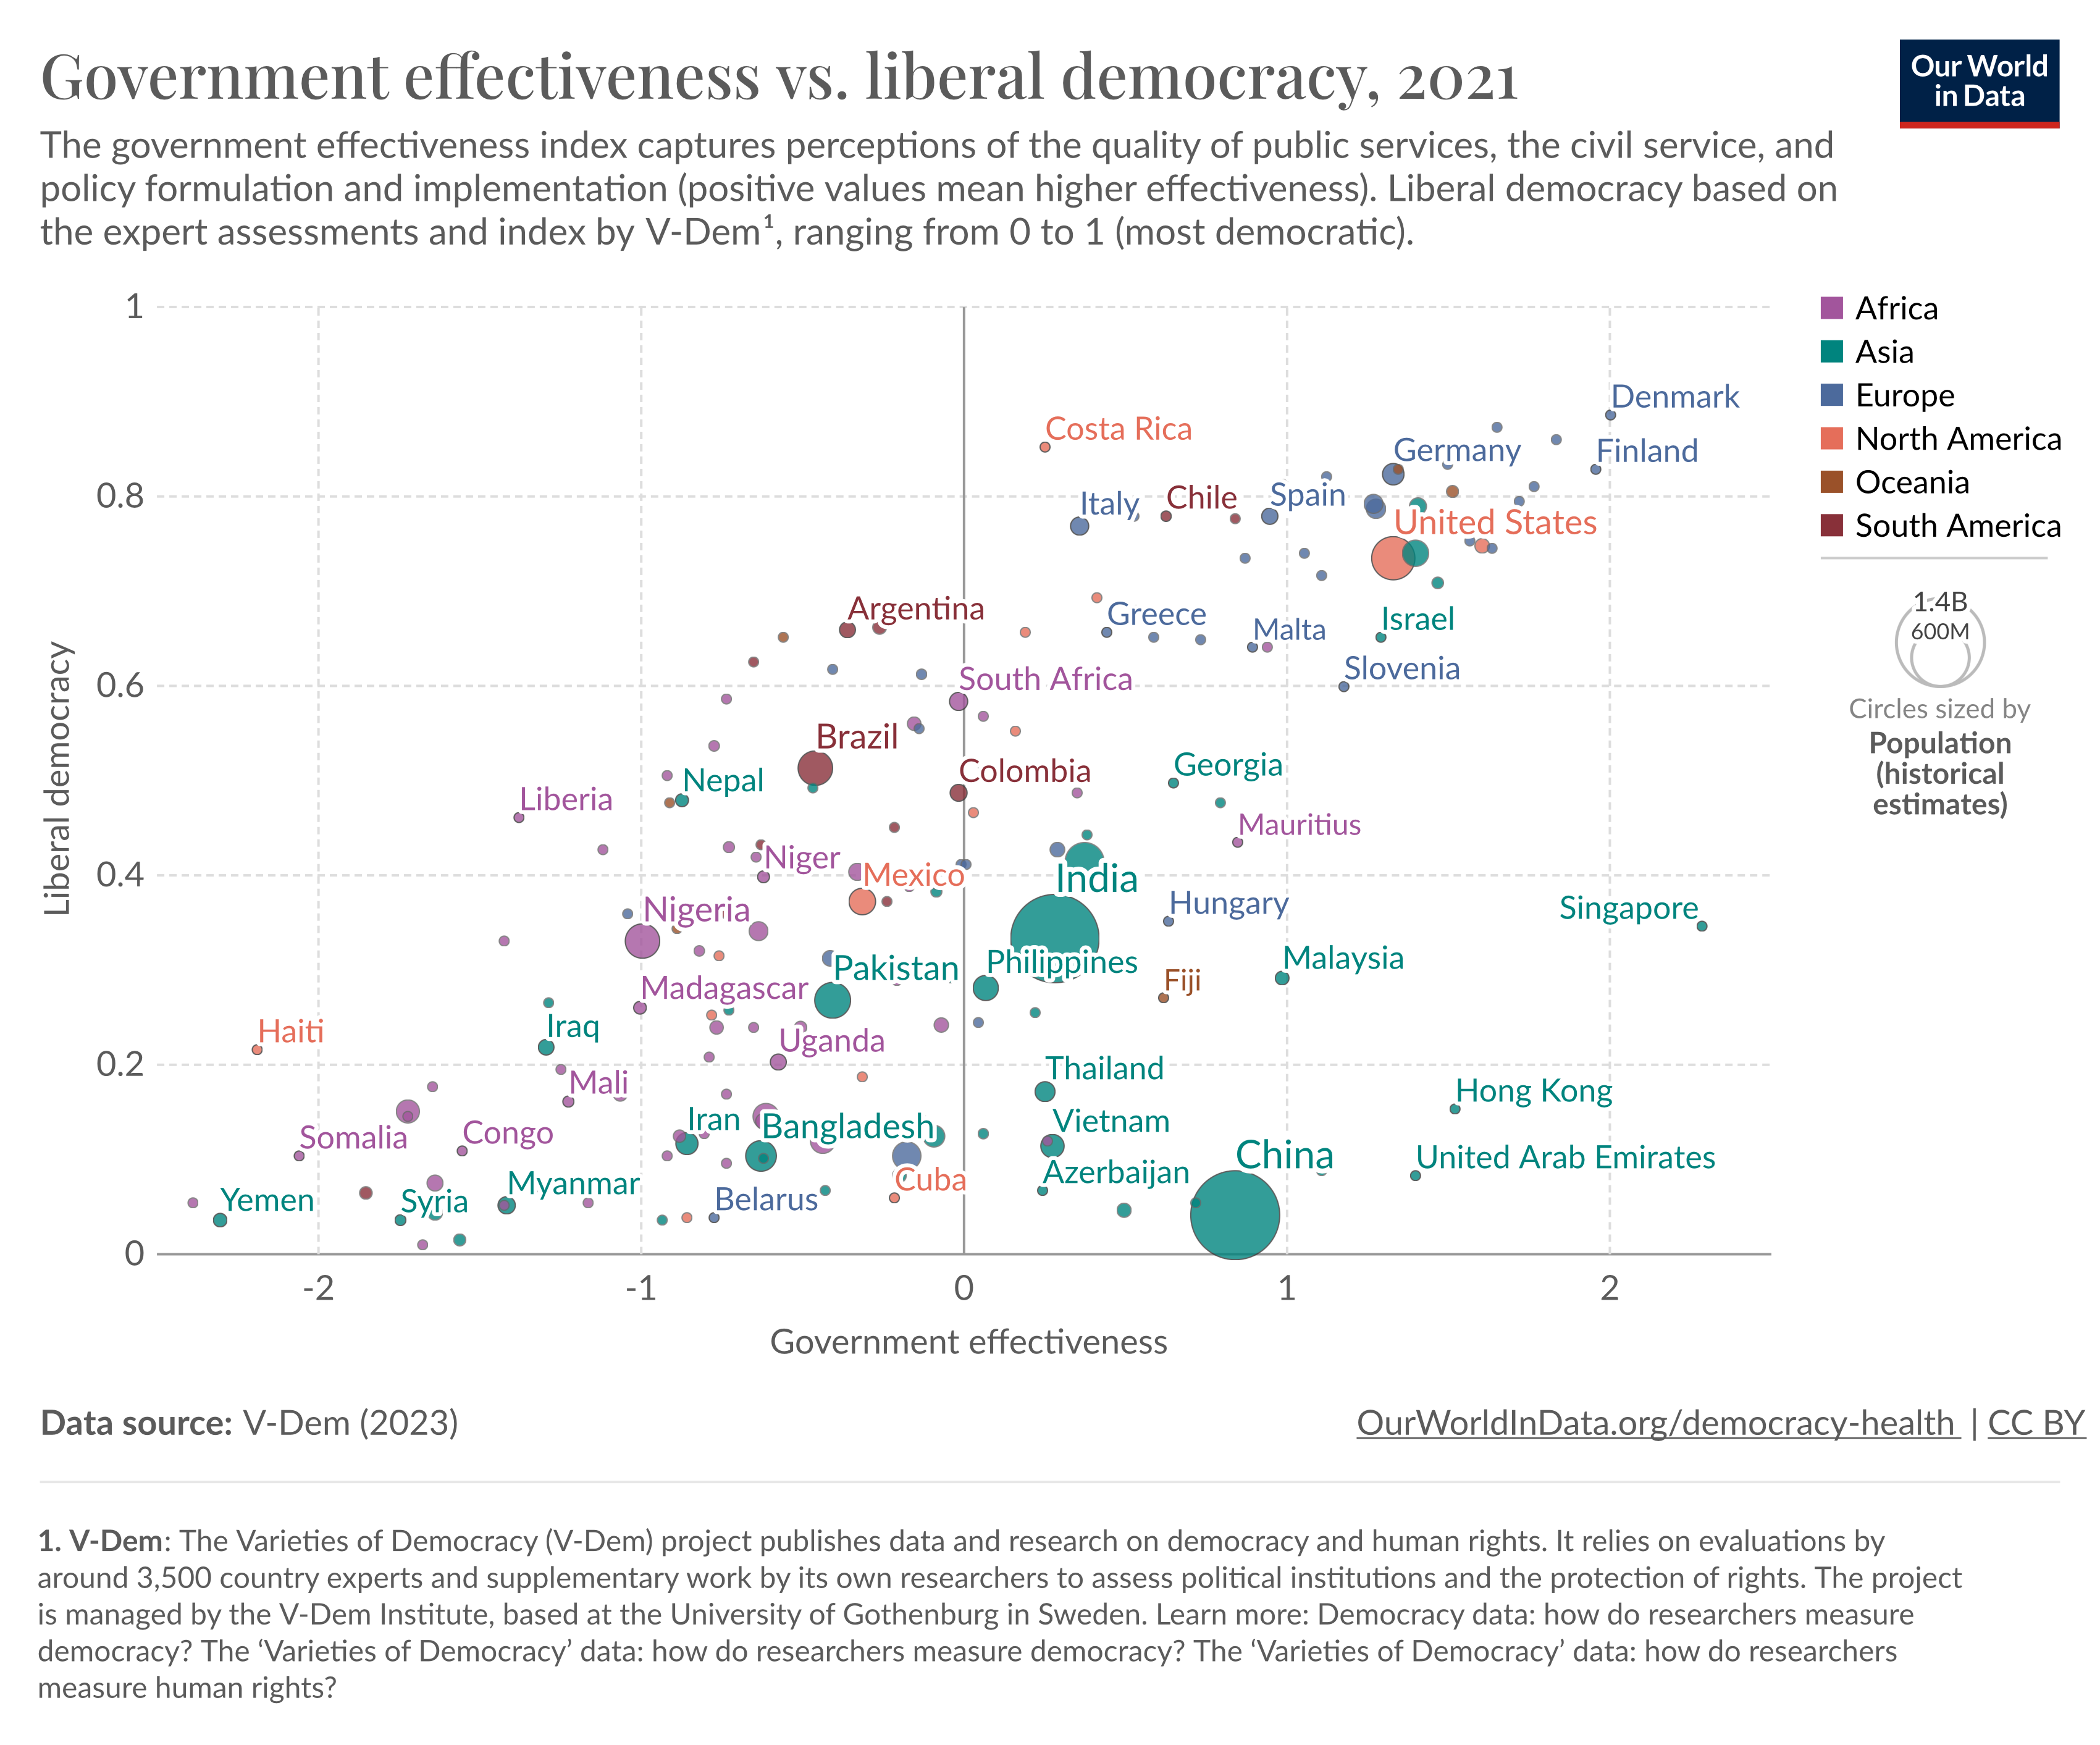 Government effectiveness vs liberal democracy, 2012.